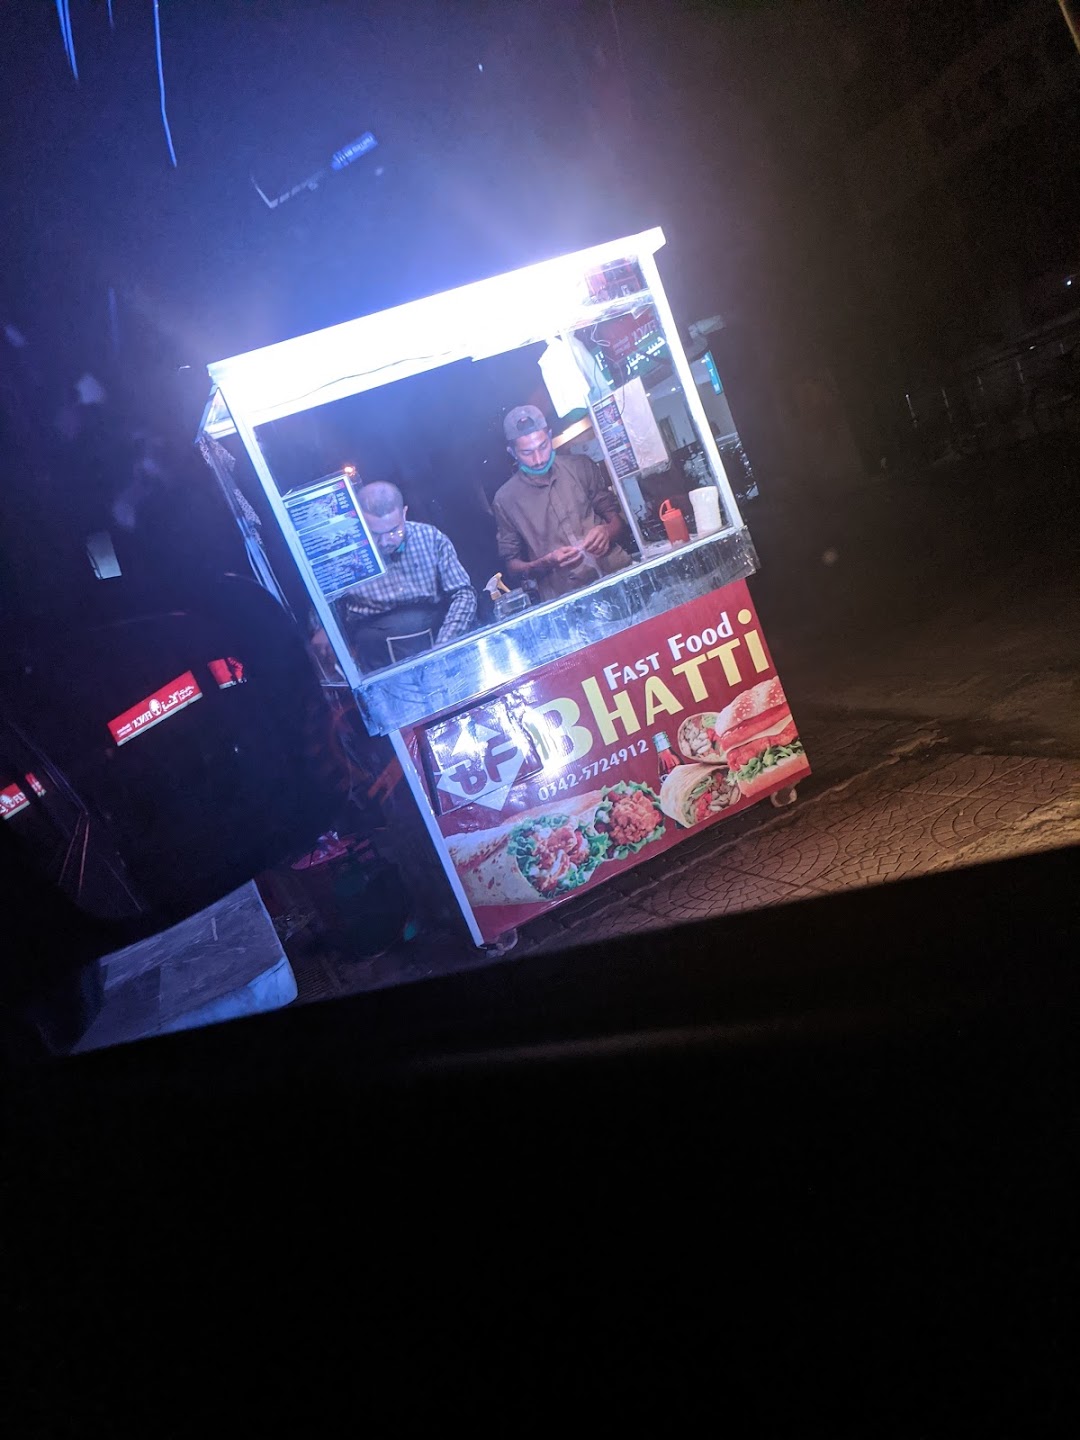 Bhatti fast food